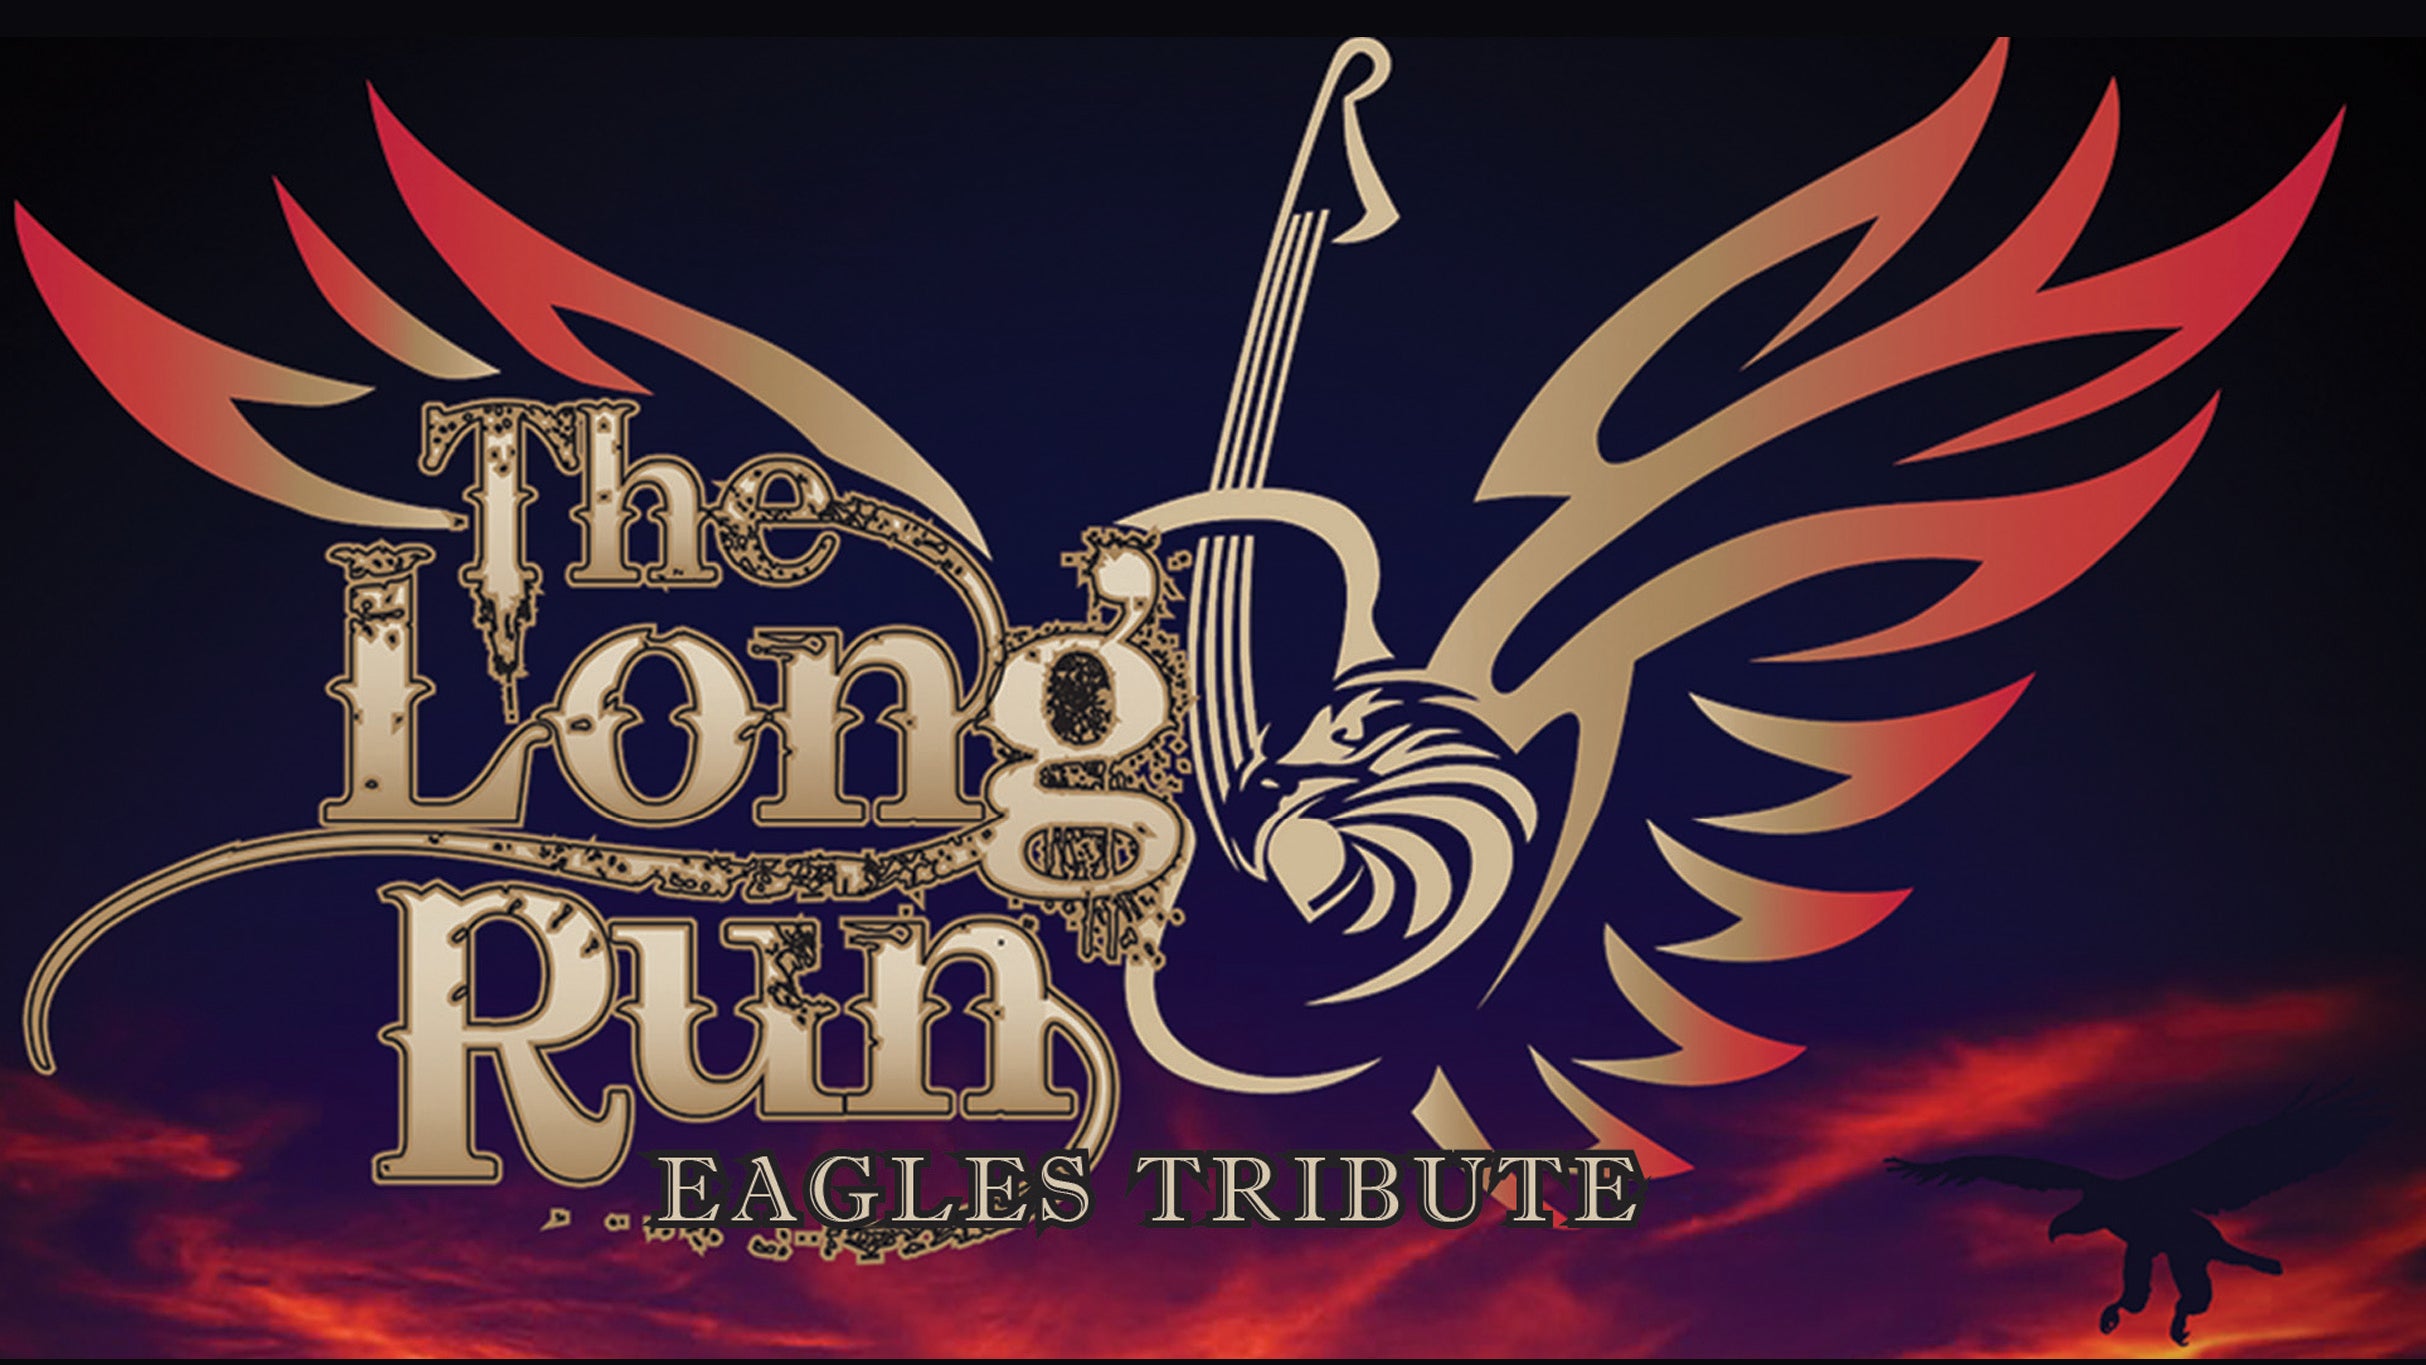 The Long Run, an Eagles Tribute